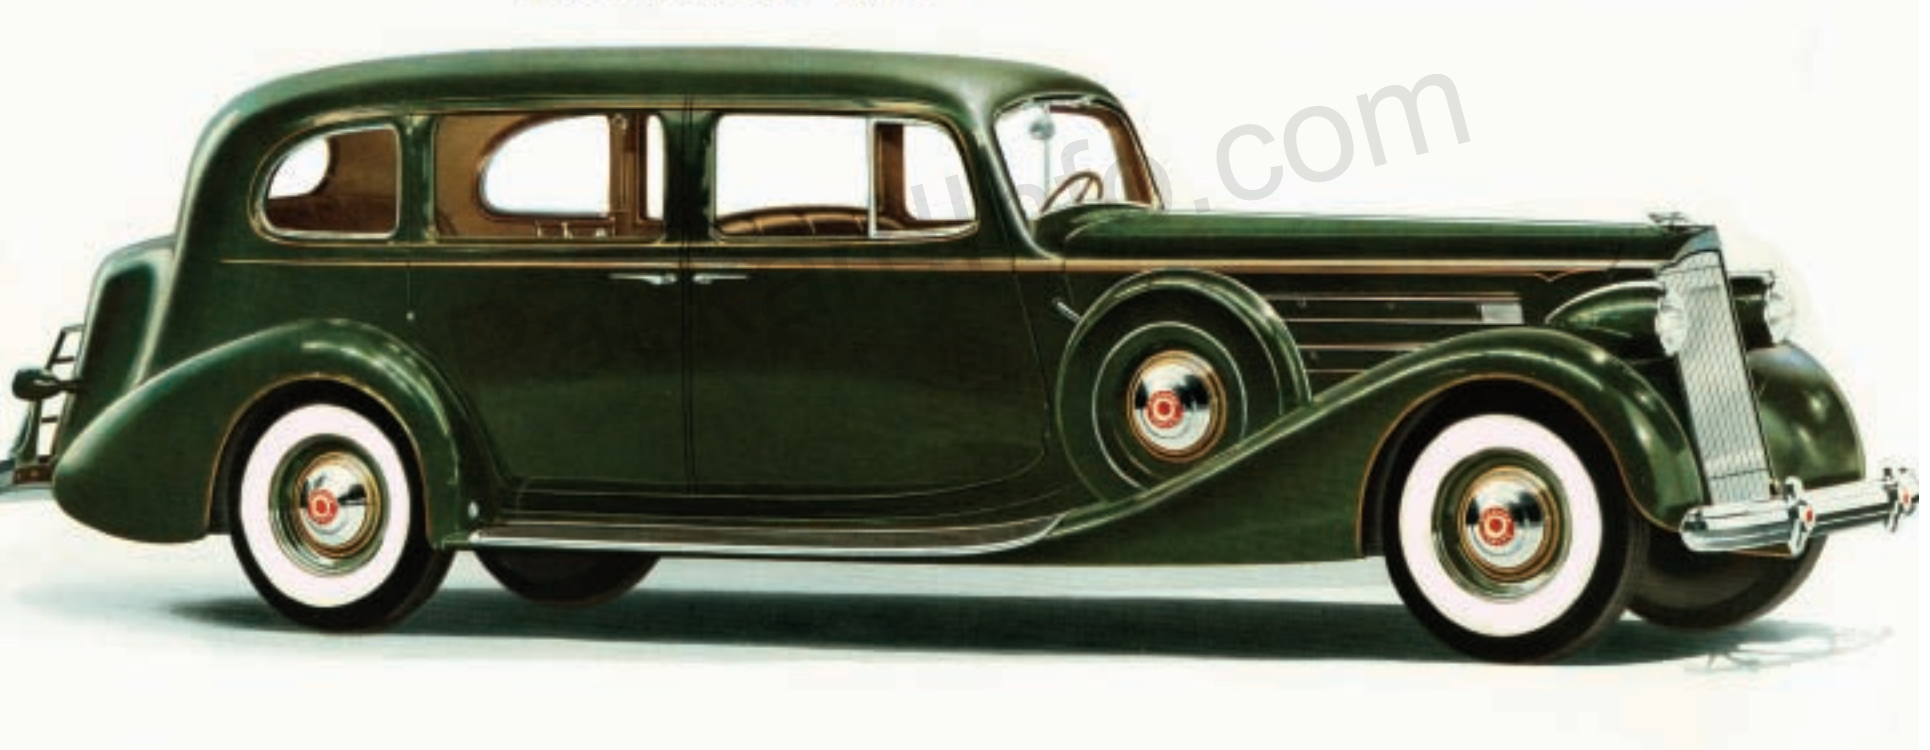 1937 15th 1035 Twelve Touring Limo